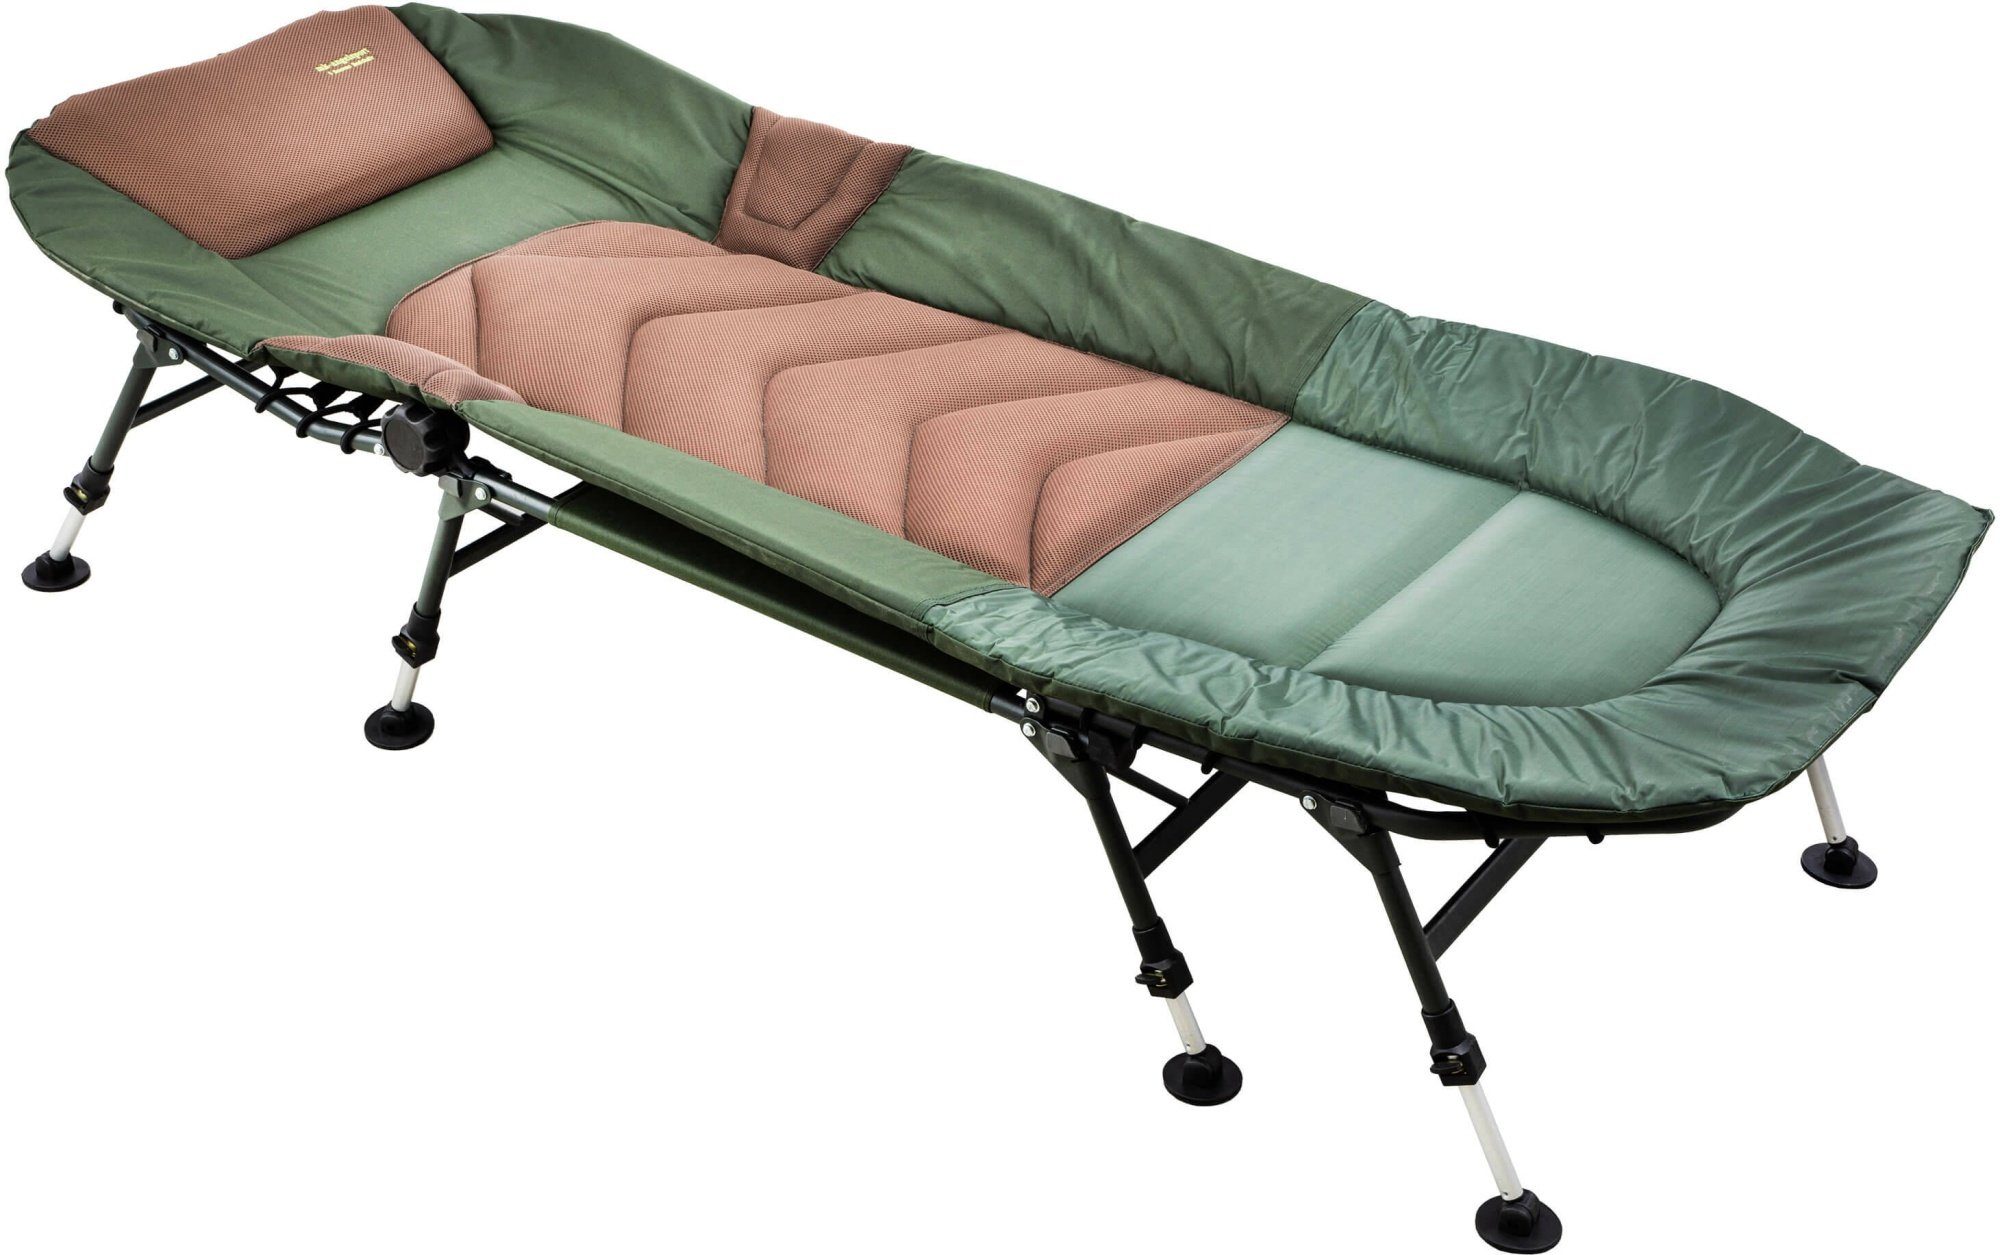 MK Angelsport Angelzelt Fort Knox + 5 Bedchairs 2Man 2 2.0 Zelt Seasons